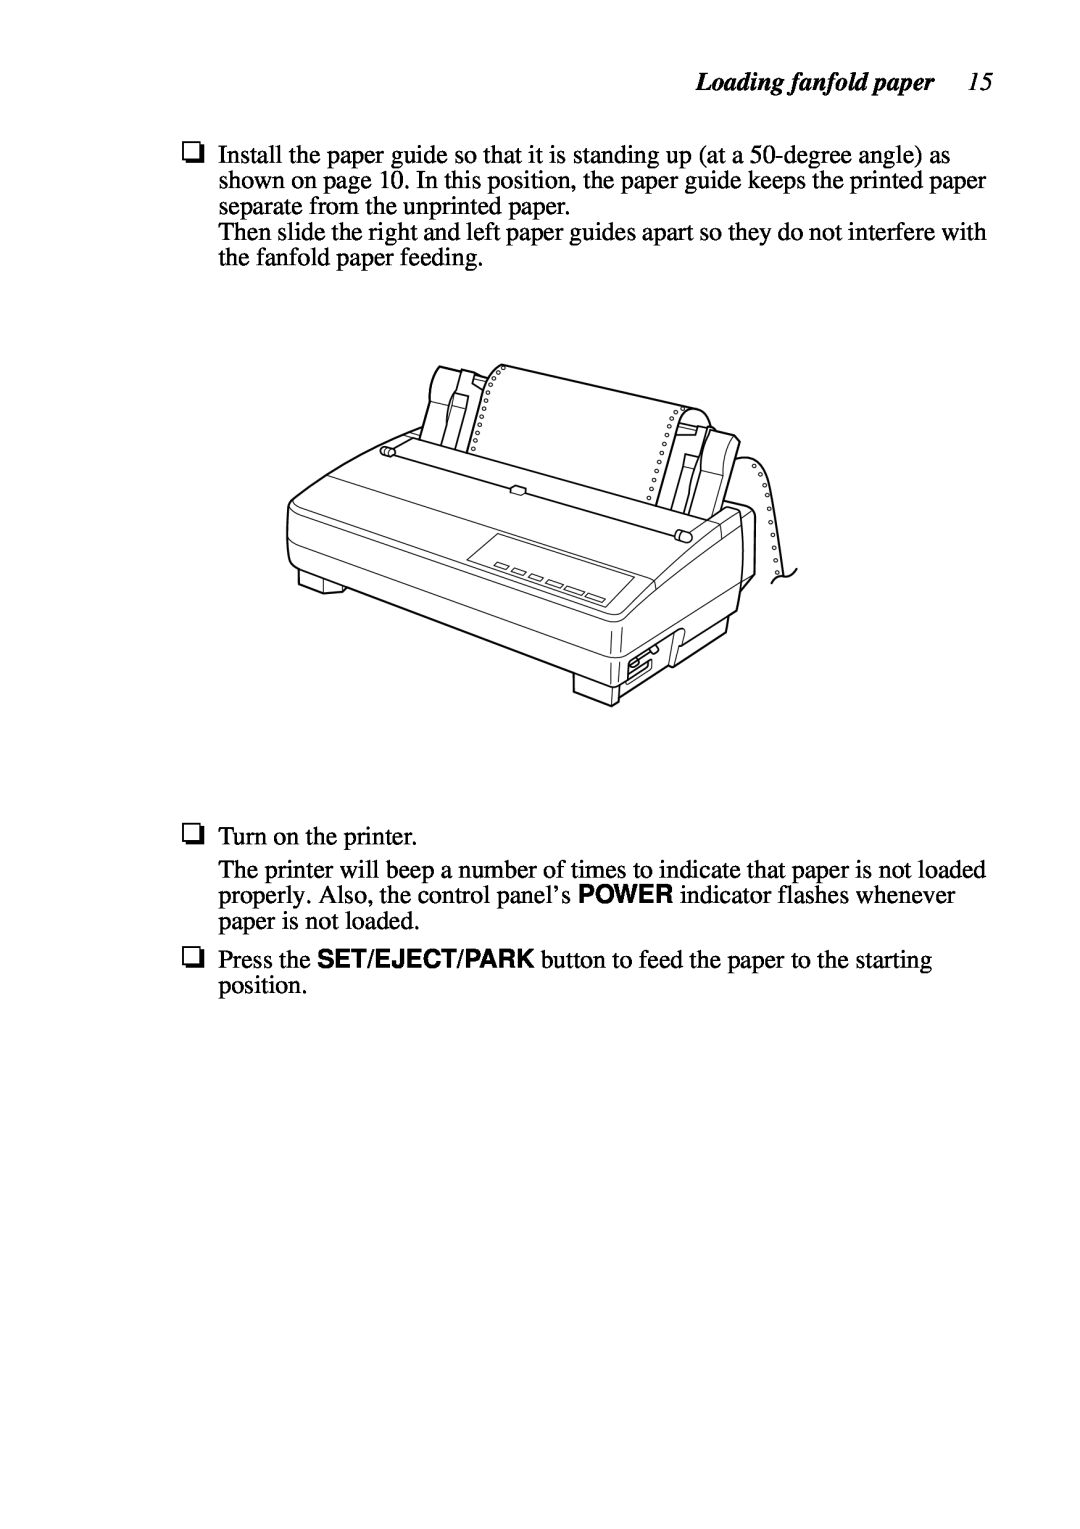 Star Micronics HA15 80825072, LC-1521, LC-1511, DOT MATRIX PRINTERS user manual Loading fanfold paper, Turn on the printer 